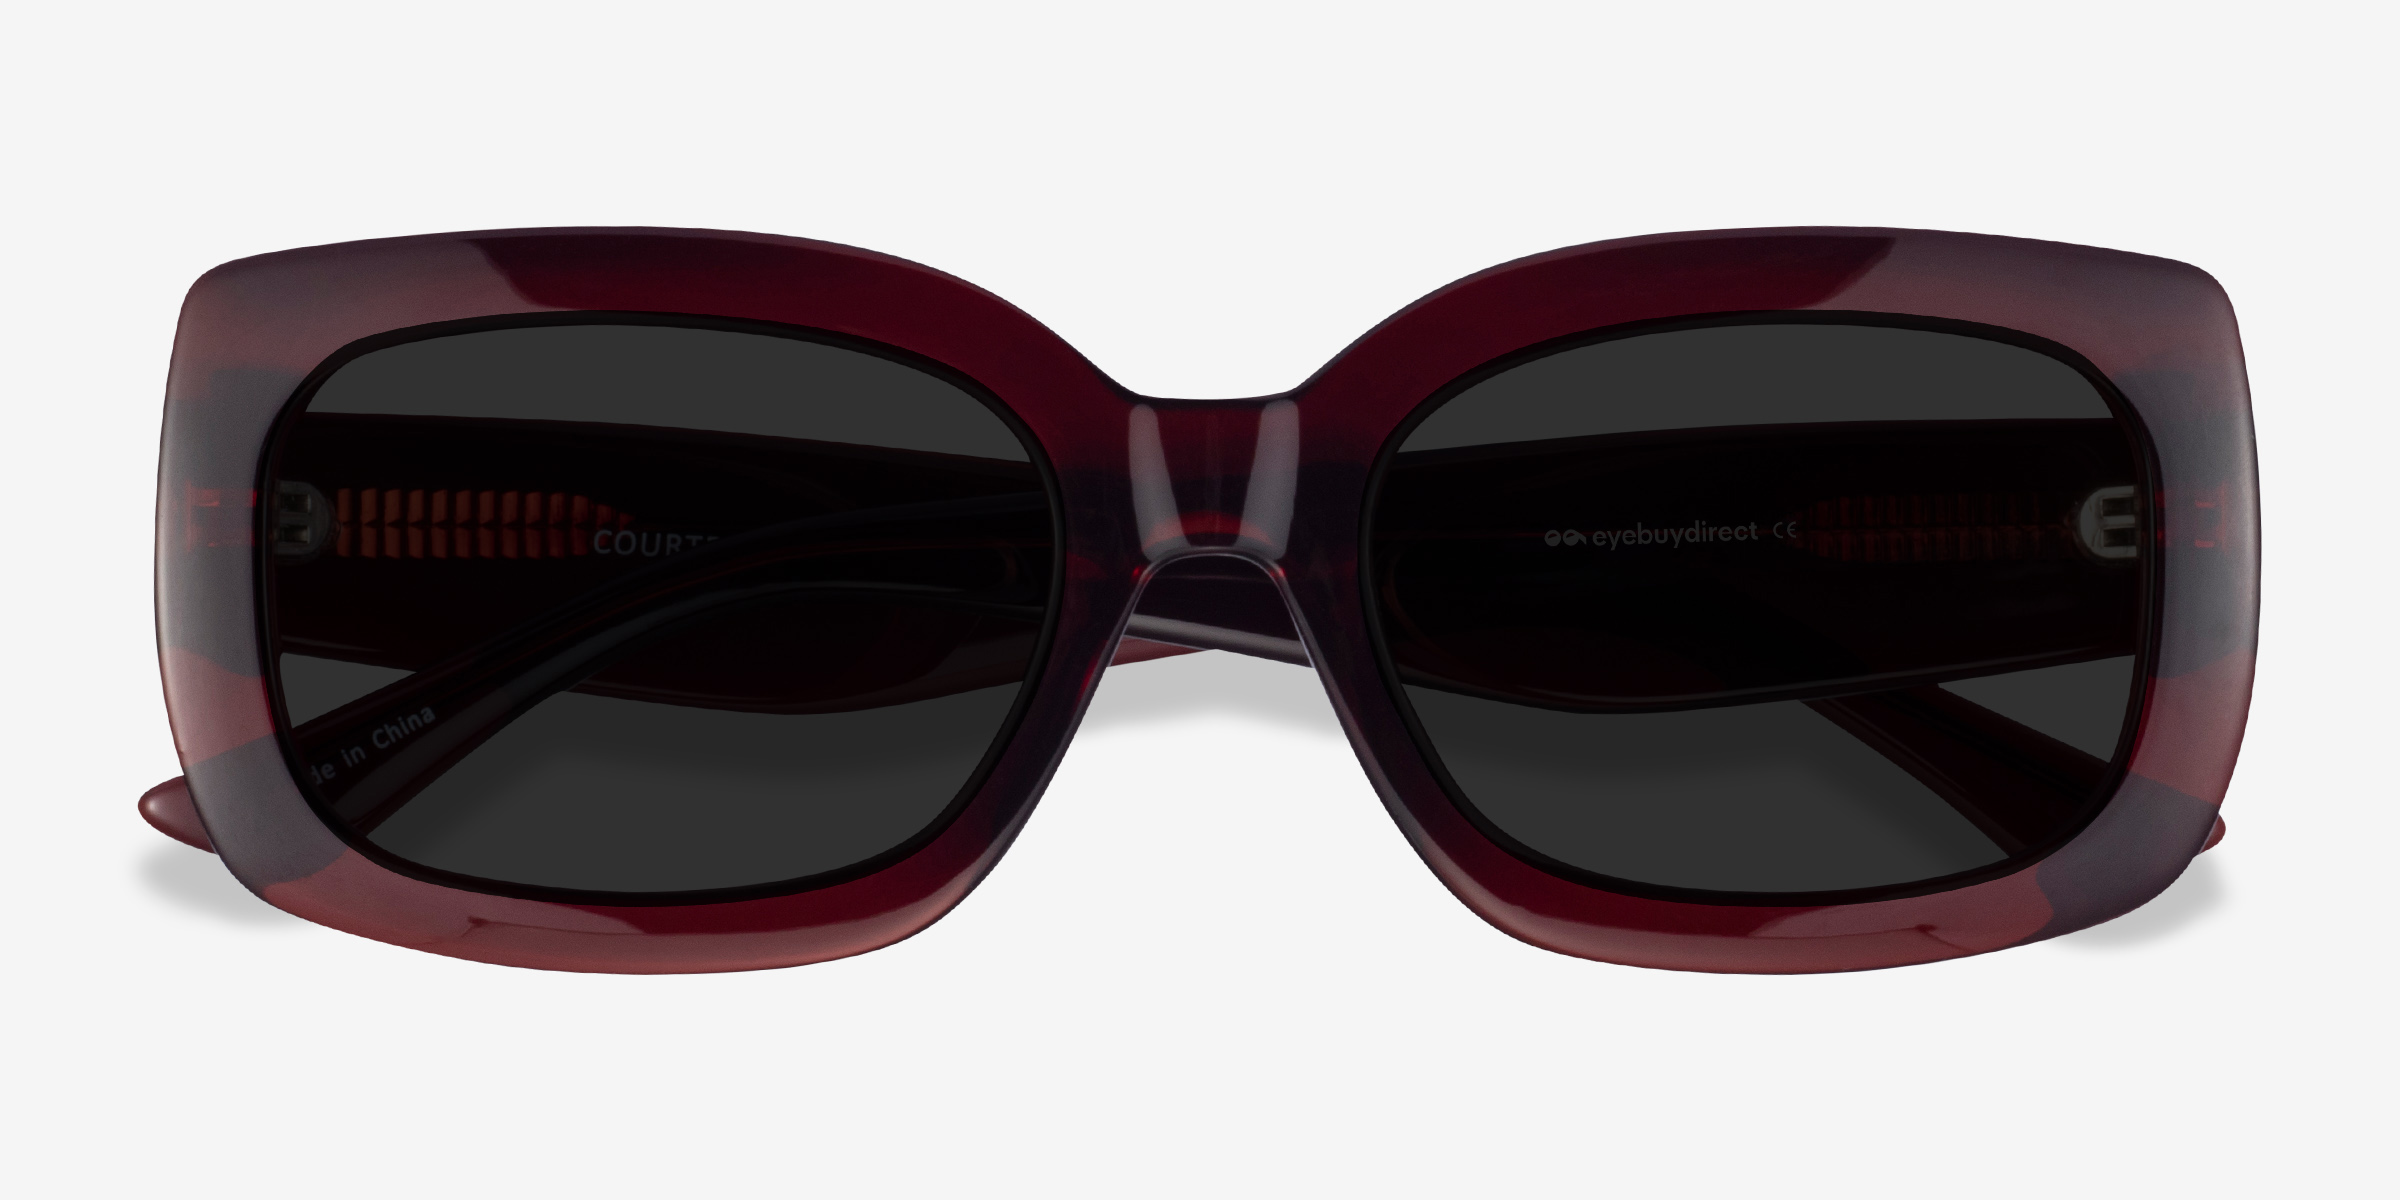 Courteney - Rectangle Burgundy Frame Sunglasses For Women | Eyebuydirect